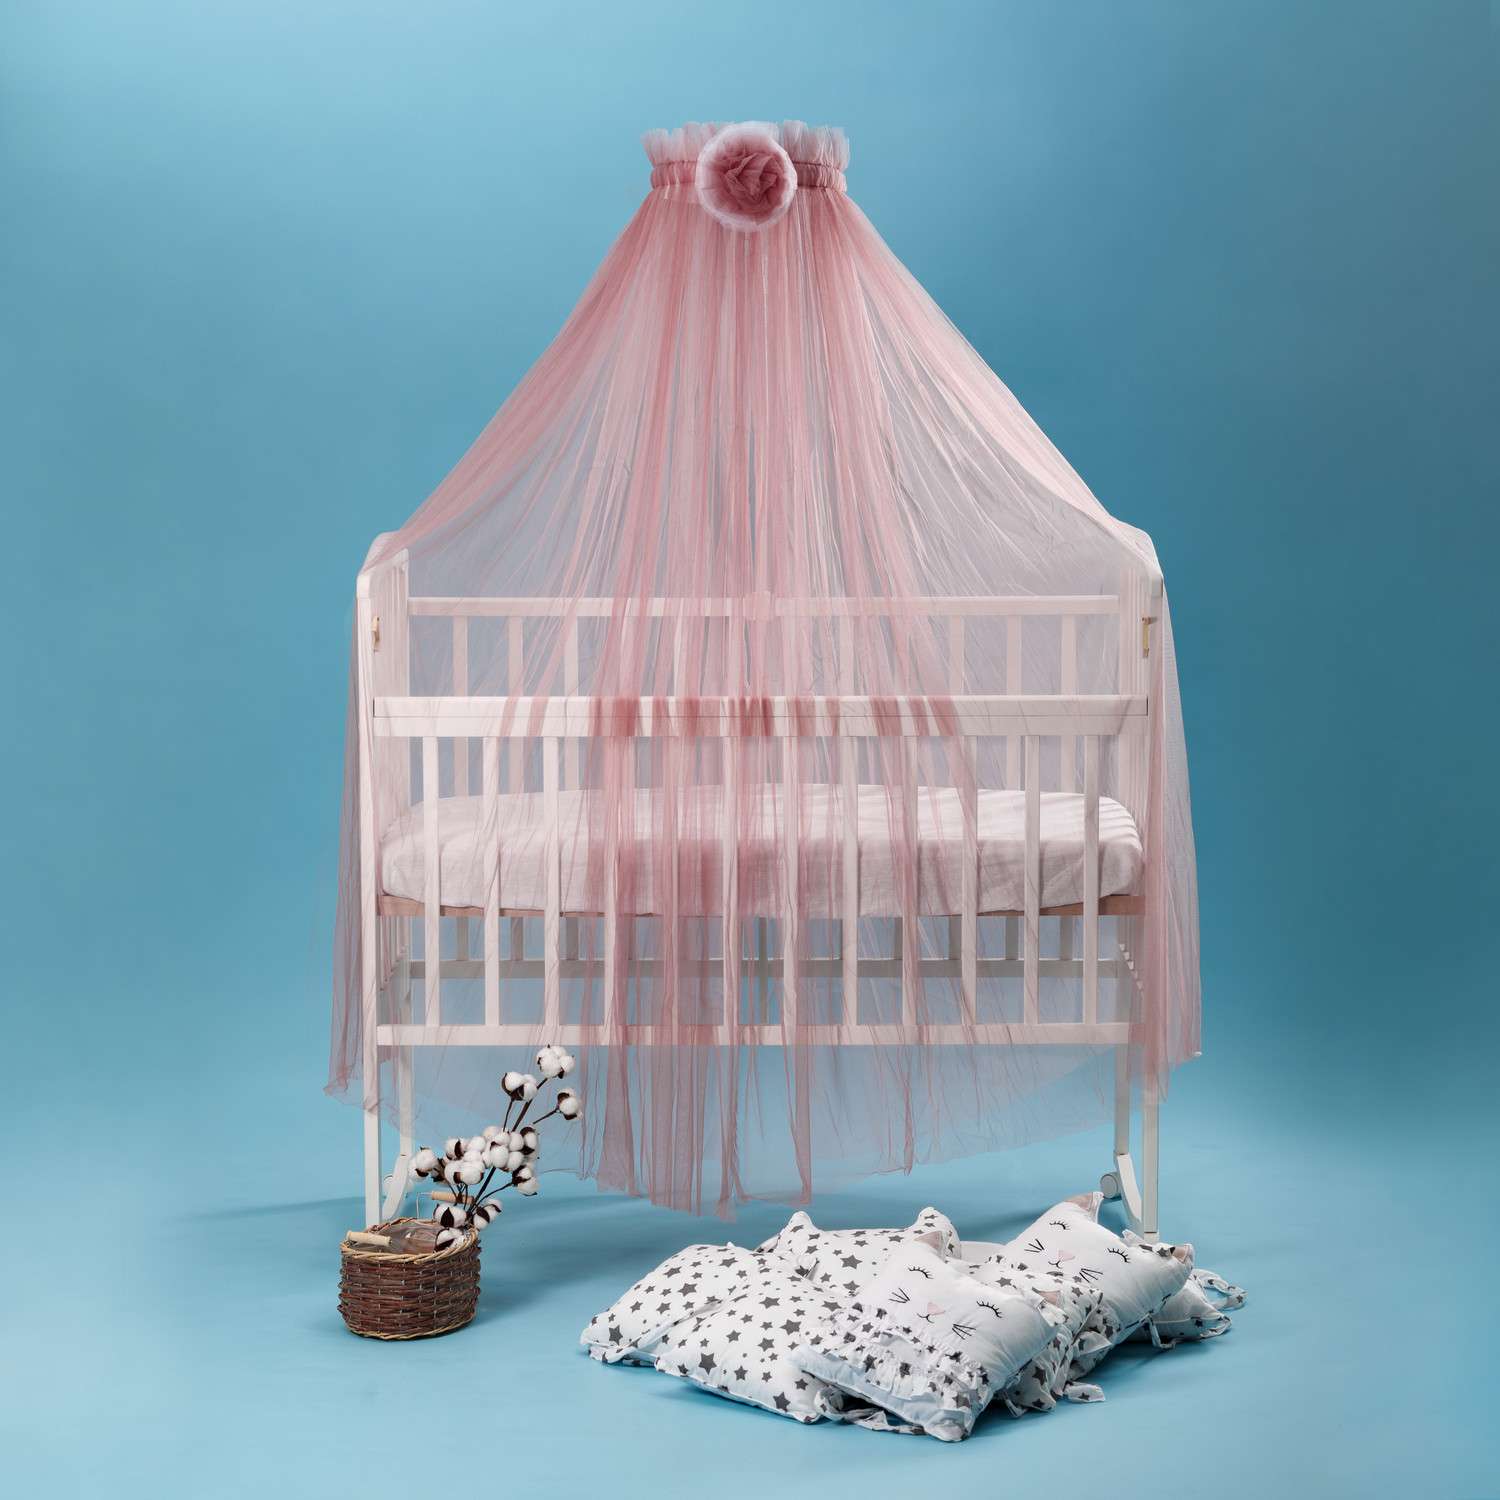 Набор для кроватки BABY STYLE балдахин розовый цветок и кронштейн - фото 1